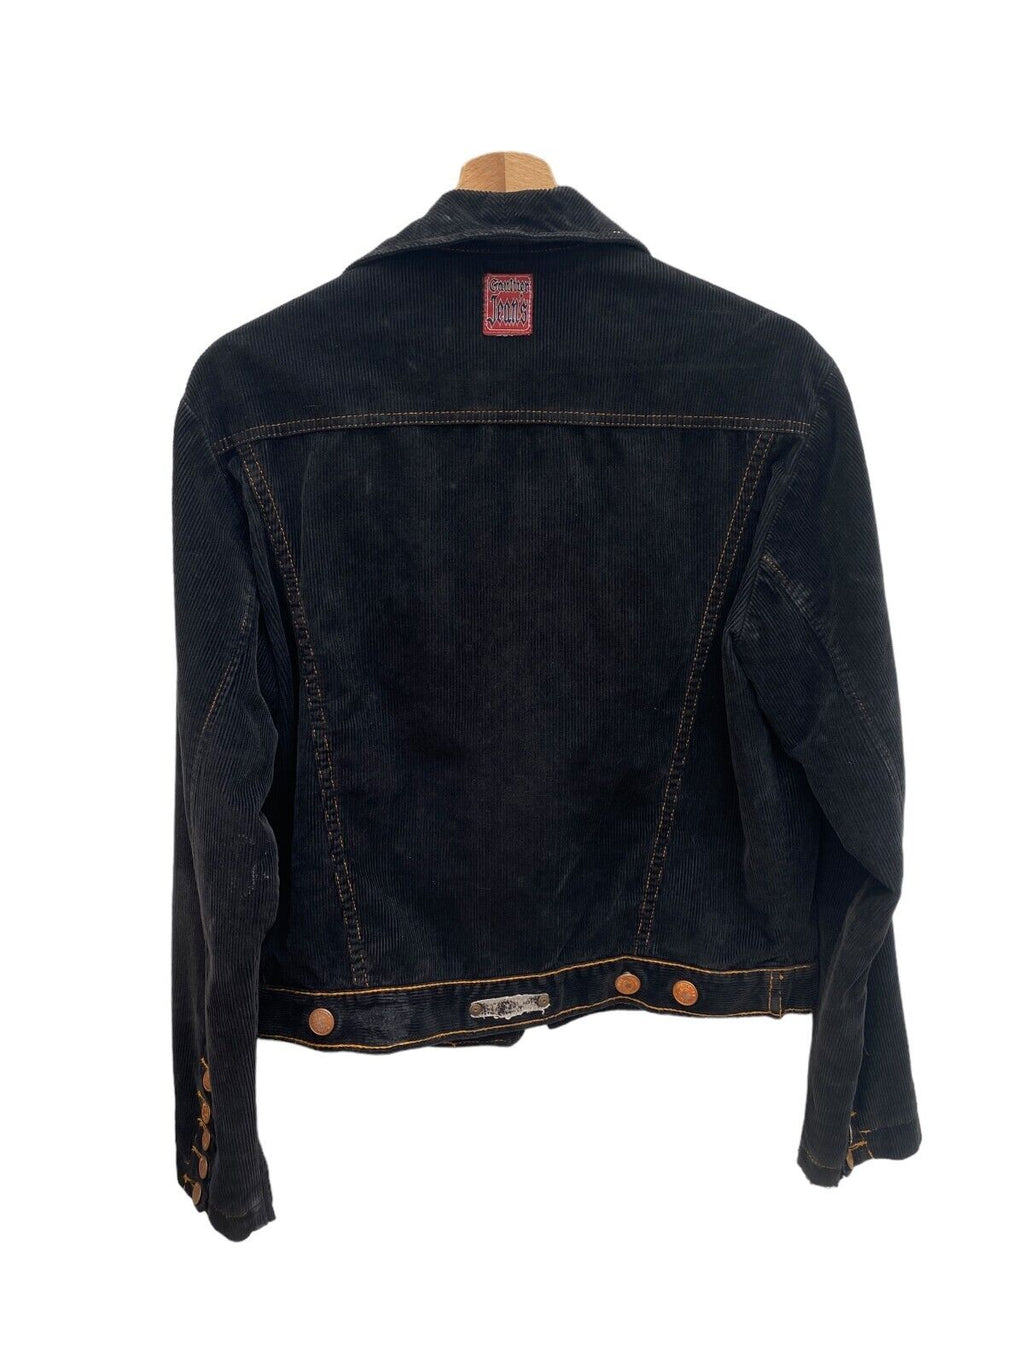 Vintage Reversible Black Corduroy Velvet Jacket Size Women M